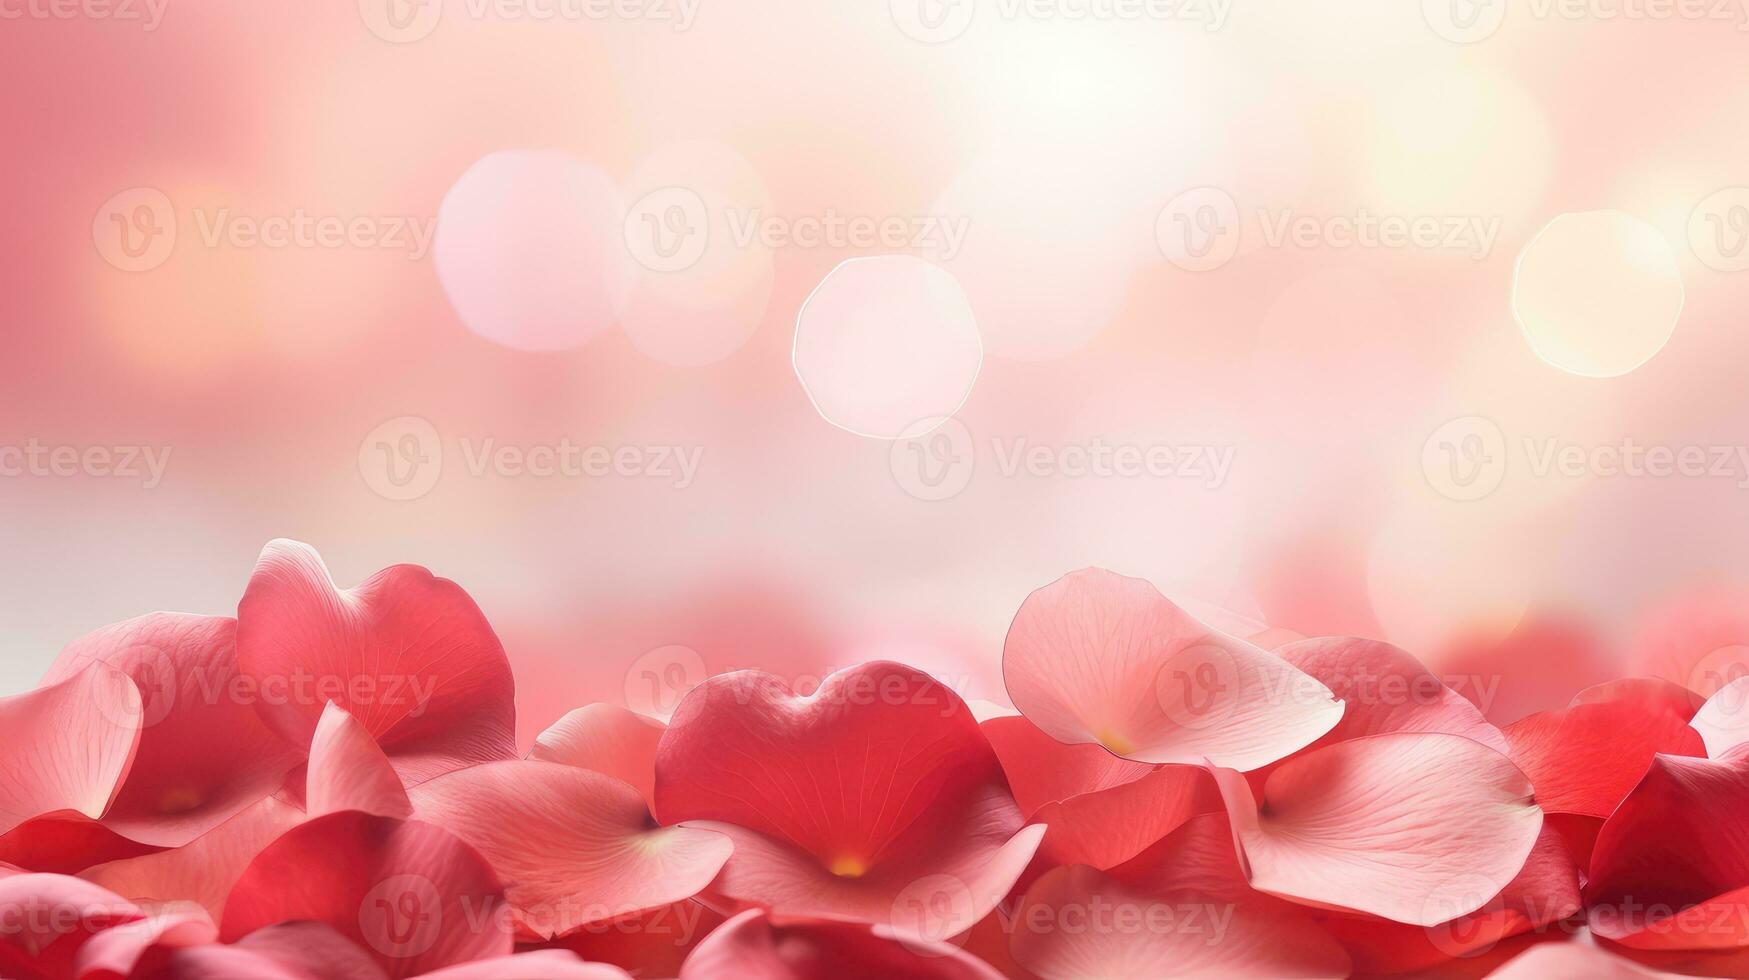 mooi romance bloem achtergrond gemakkelijk ai gegenereerd foto